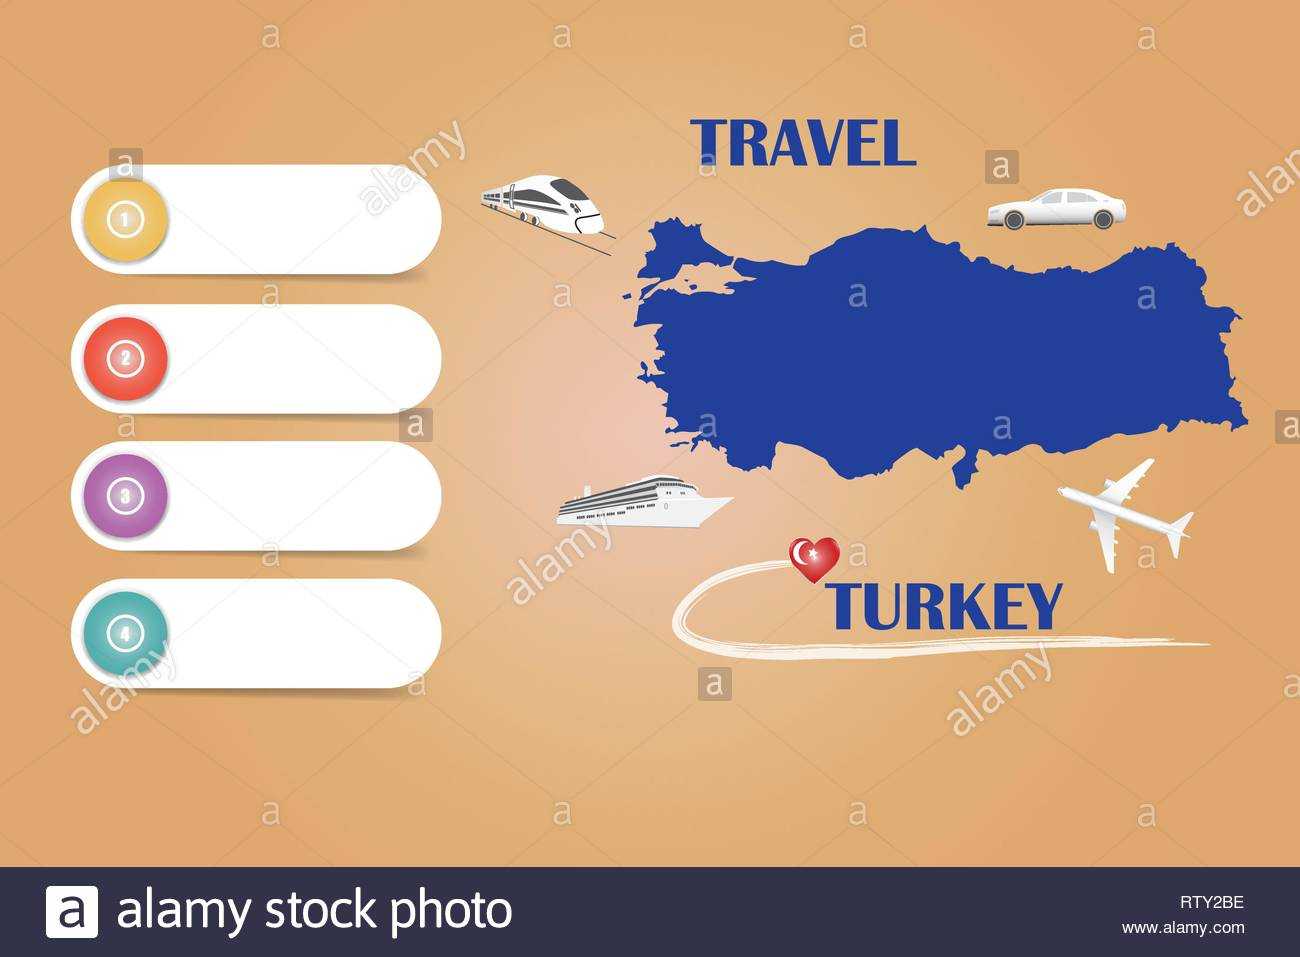 Travel Turkey Template Vector For Travel Agencies Etc Inside Blank Turkey Template